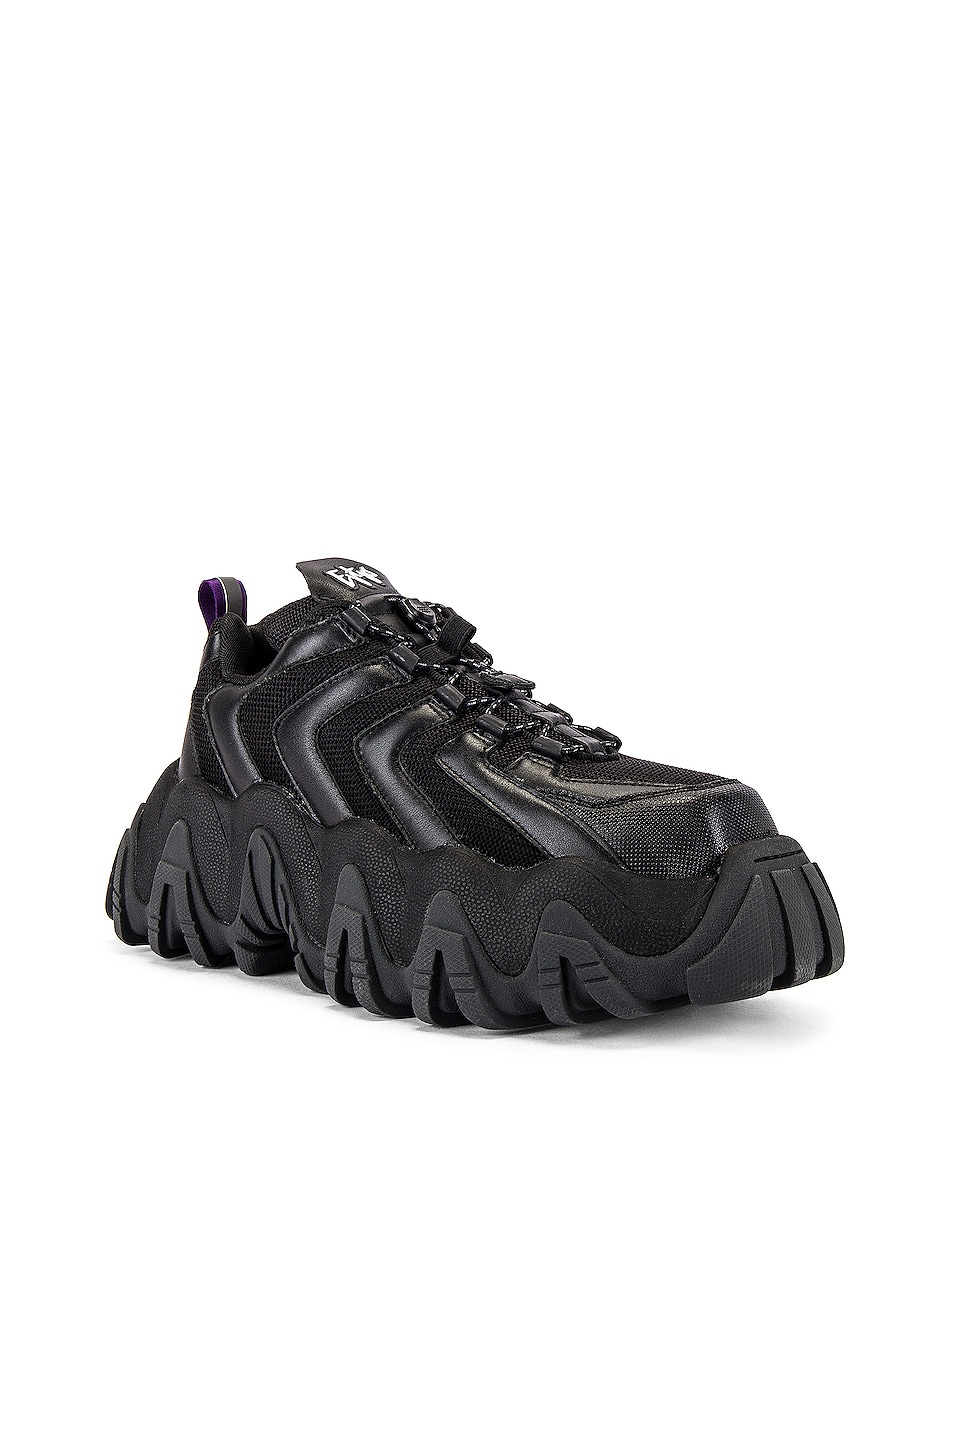 Eytys Halo Leather Sneaker in Black | FWRD